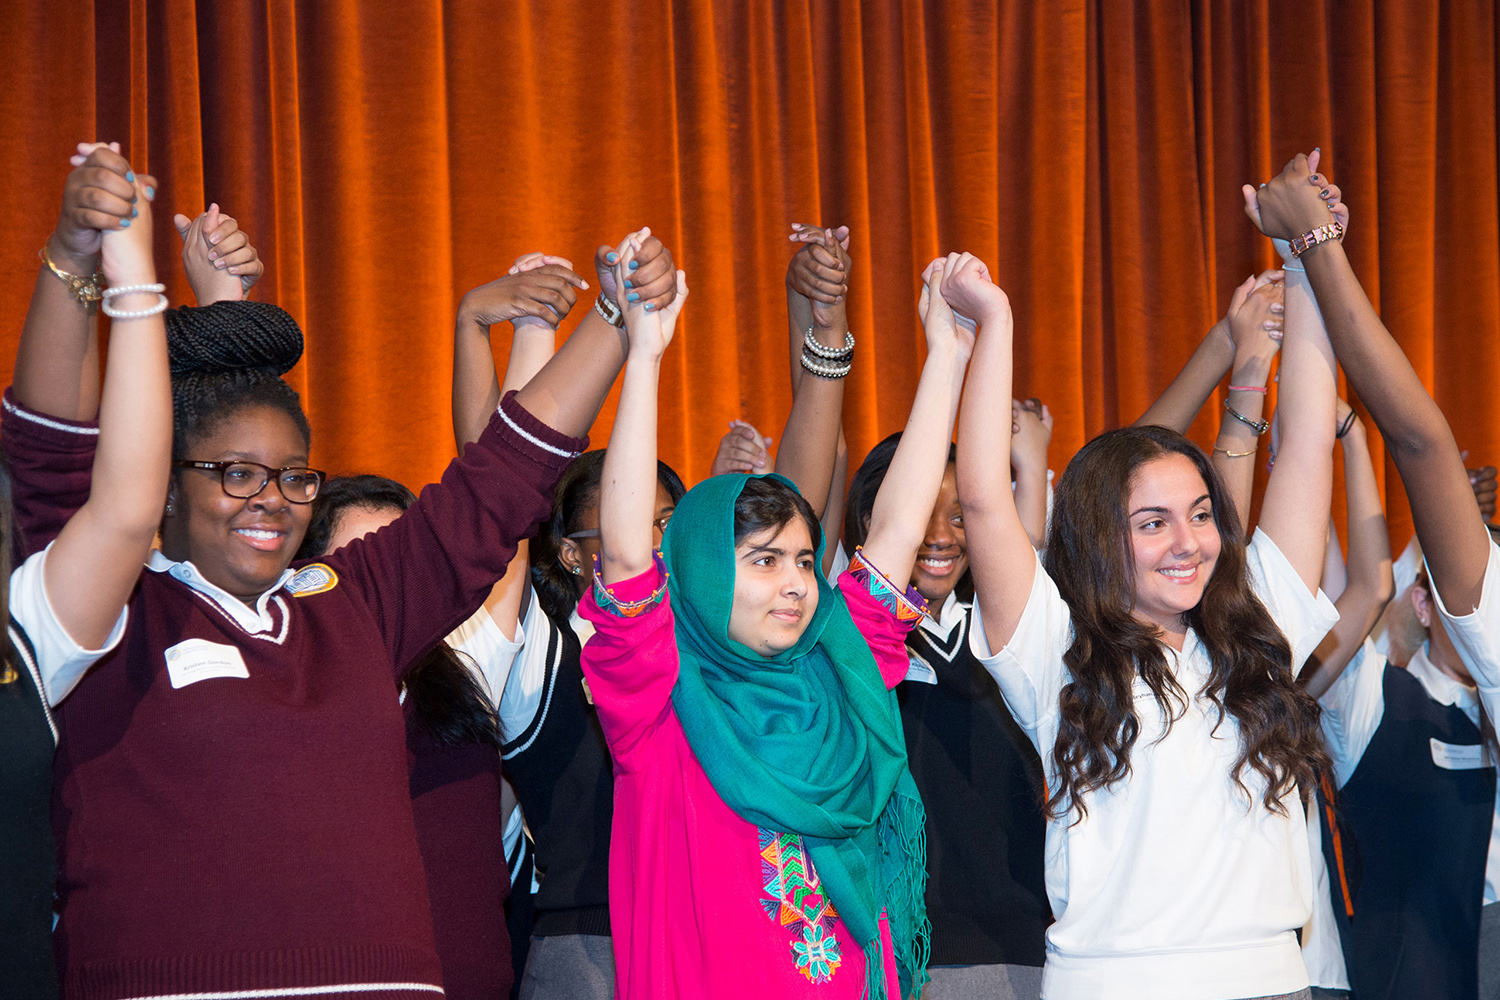 Ben Asen Event Photo: Malala Yousafzai with New York City High School students